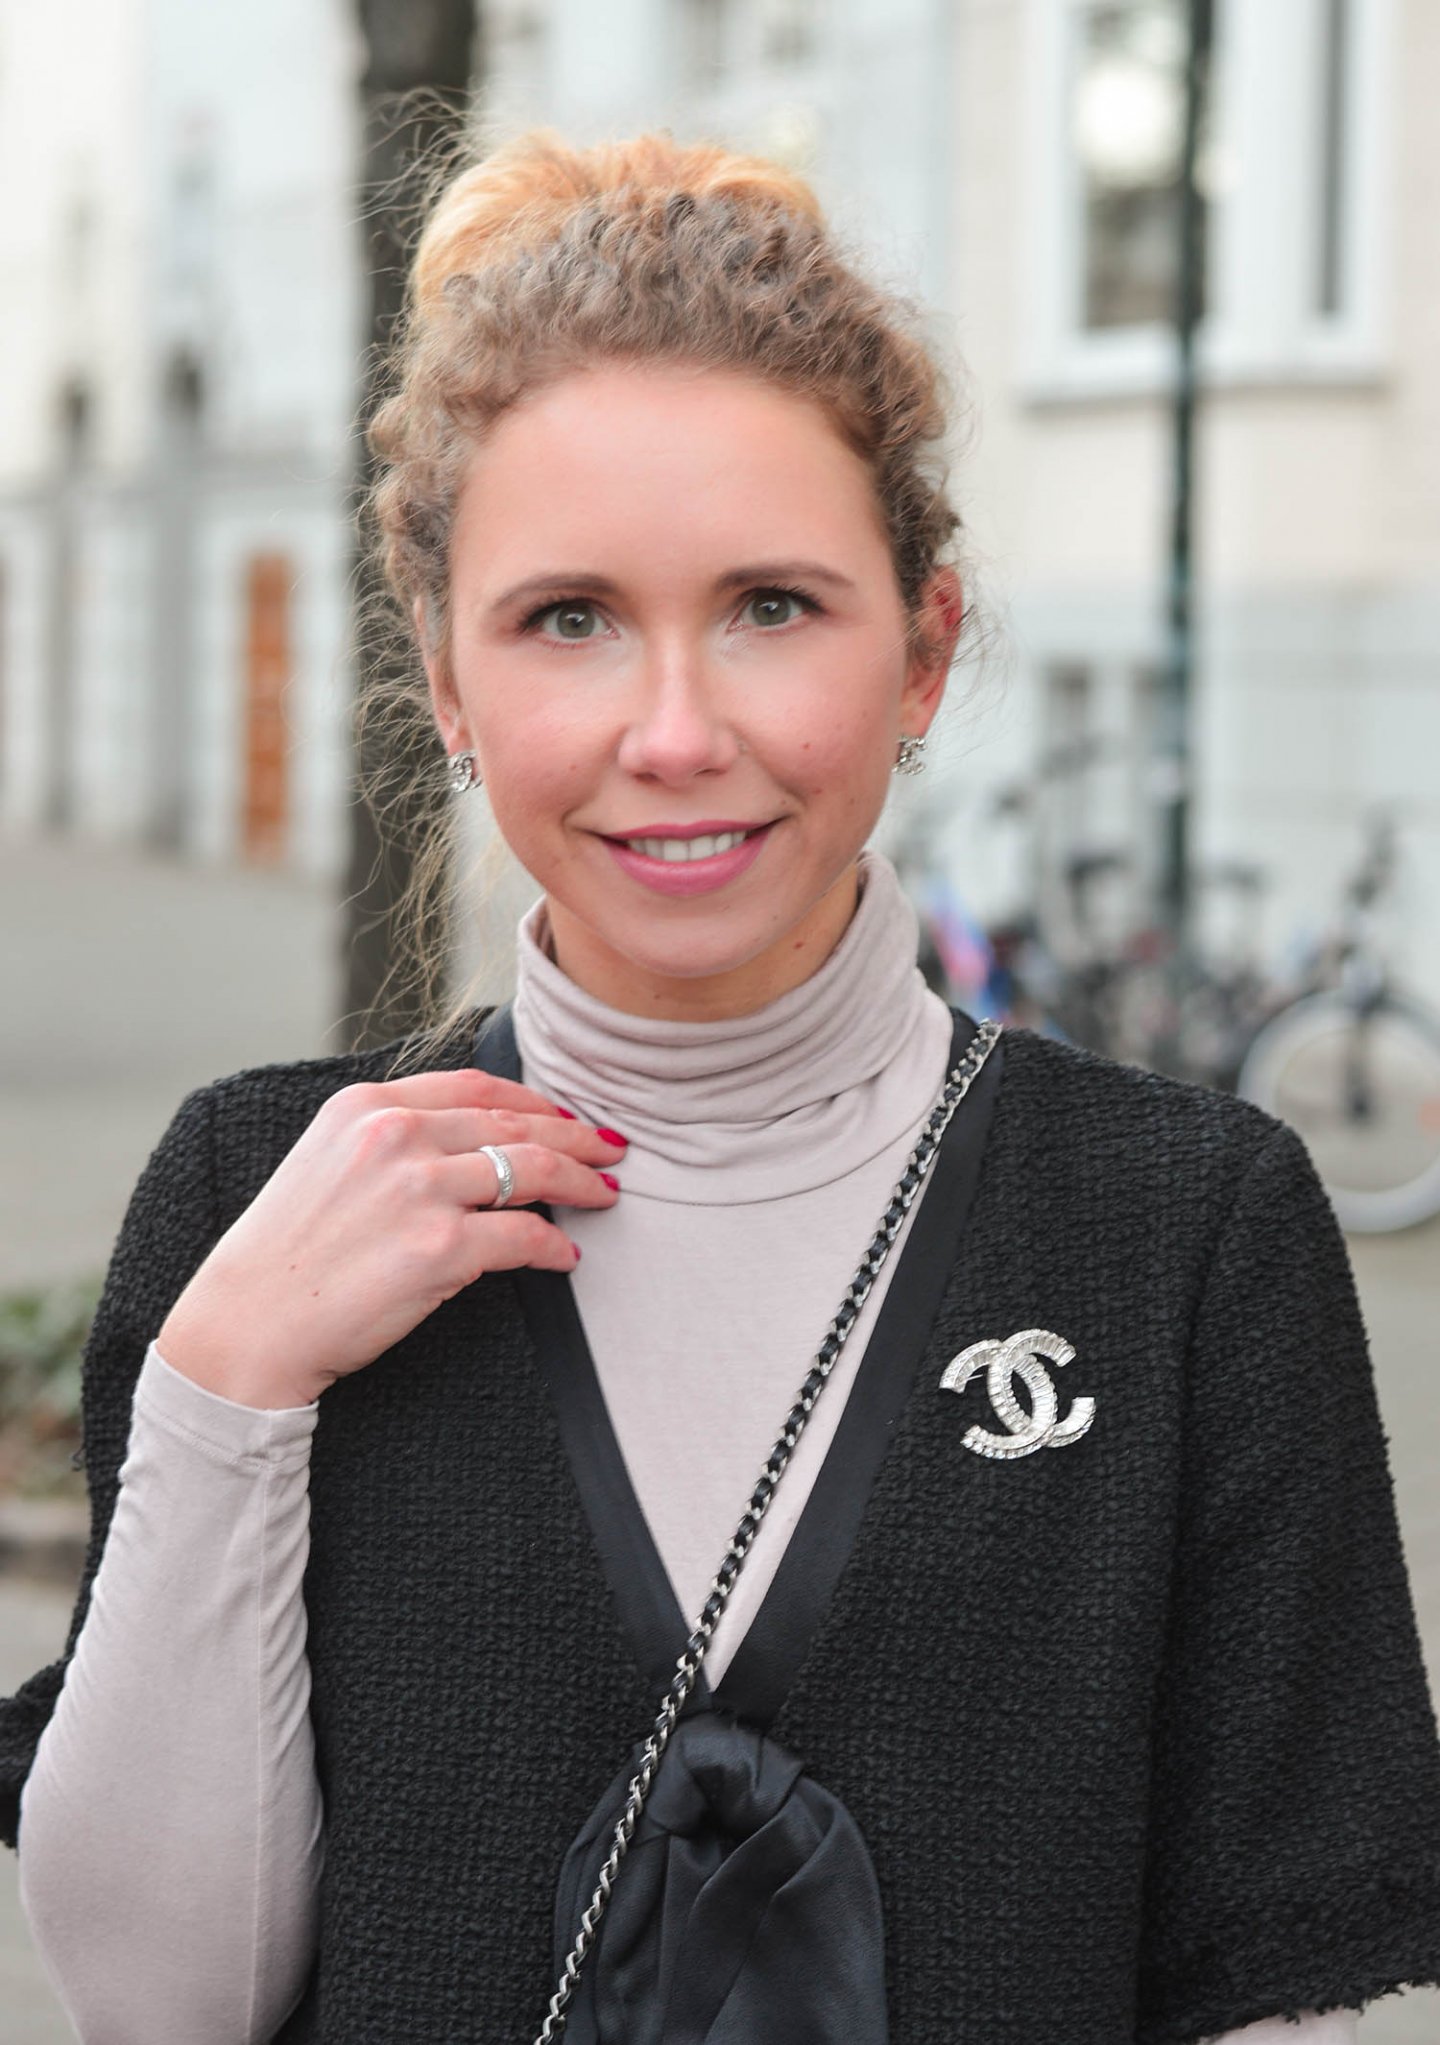 Tweed-Dress-Zara-Chanel-Accessoires-Kationette-Fashionblog-Germany